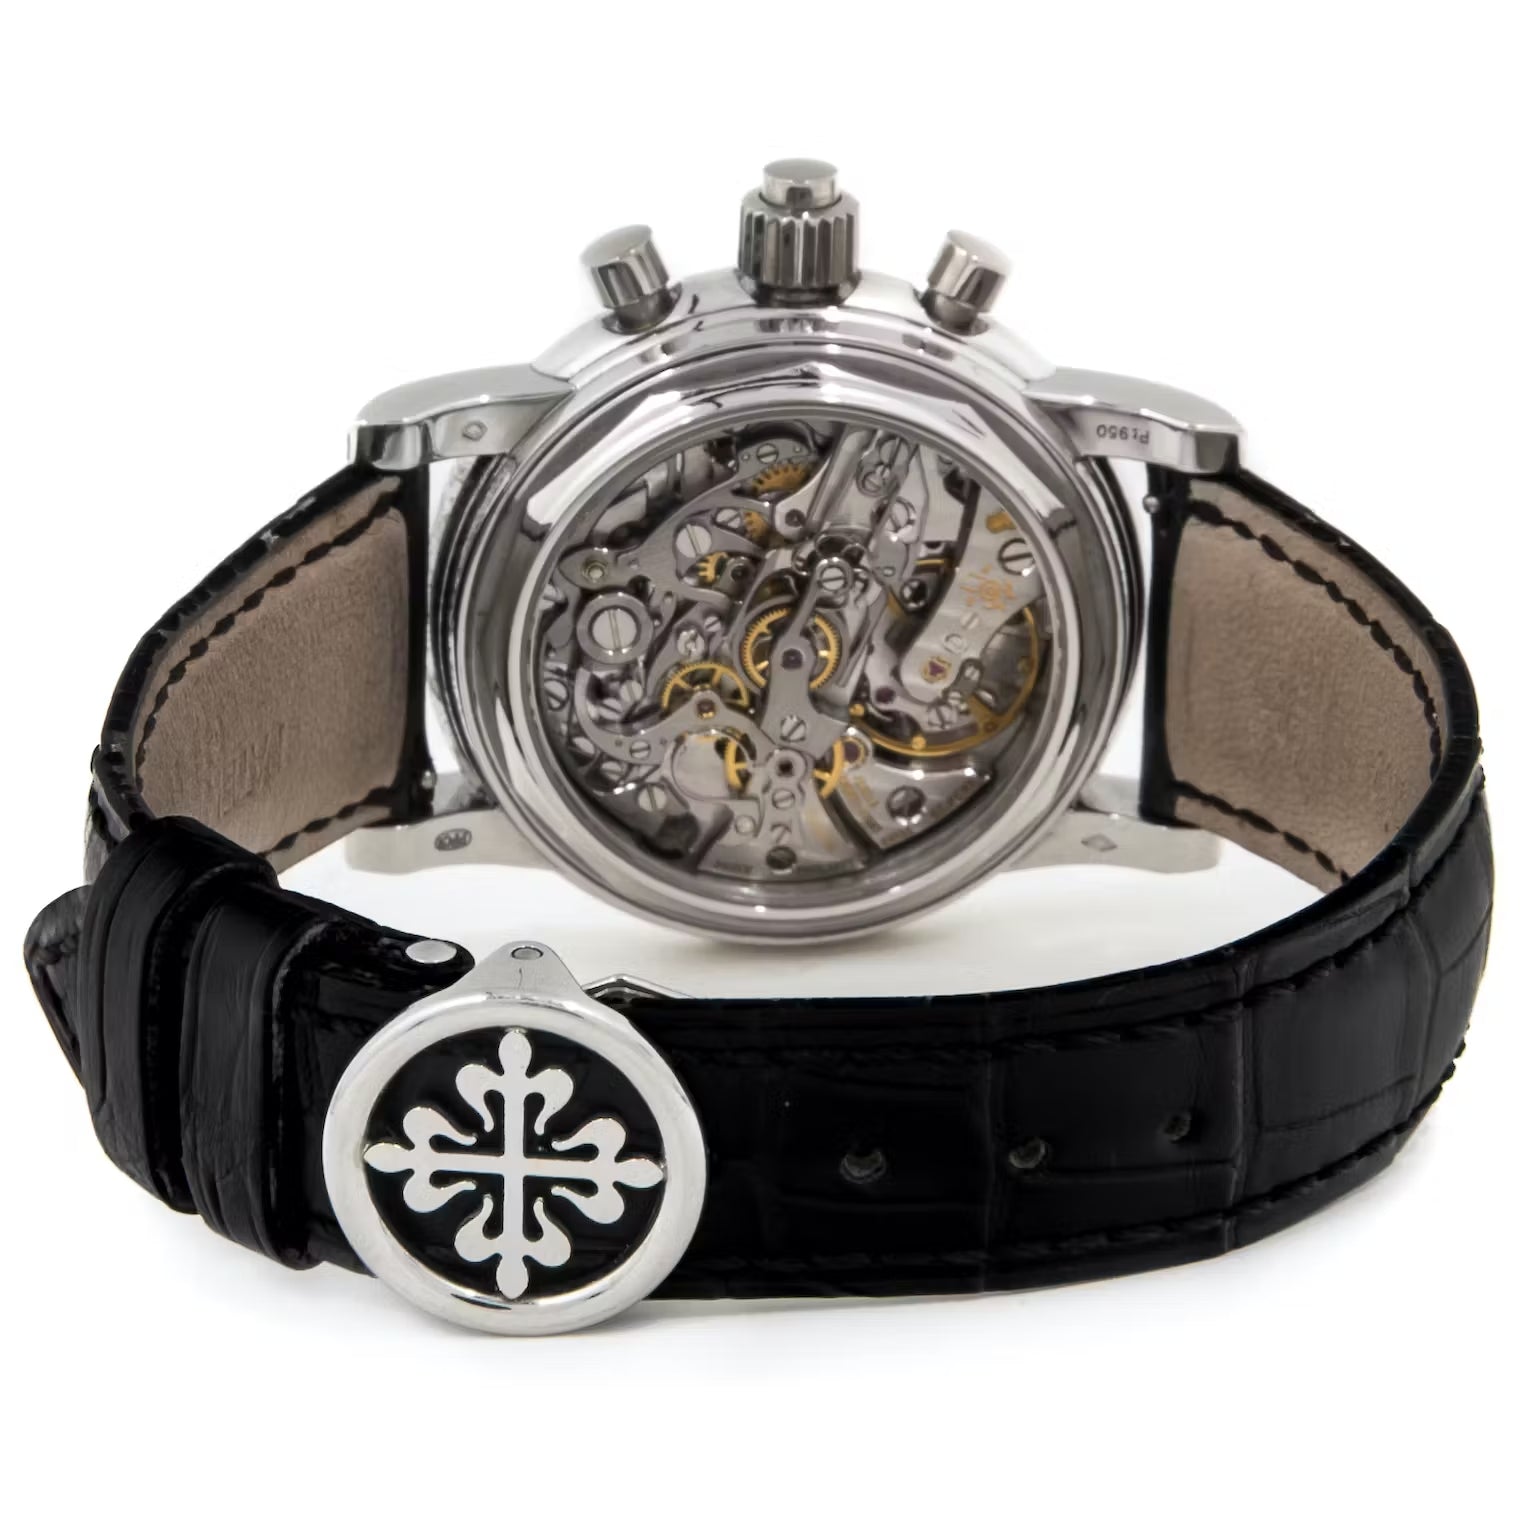 Patek Philippe Grand Complications Perpetual Calendar Chronograph Platinum Men's Watch